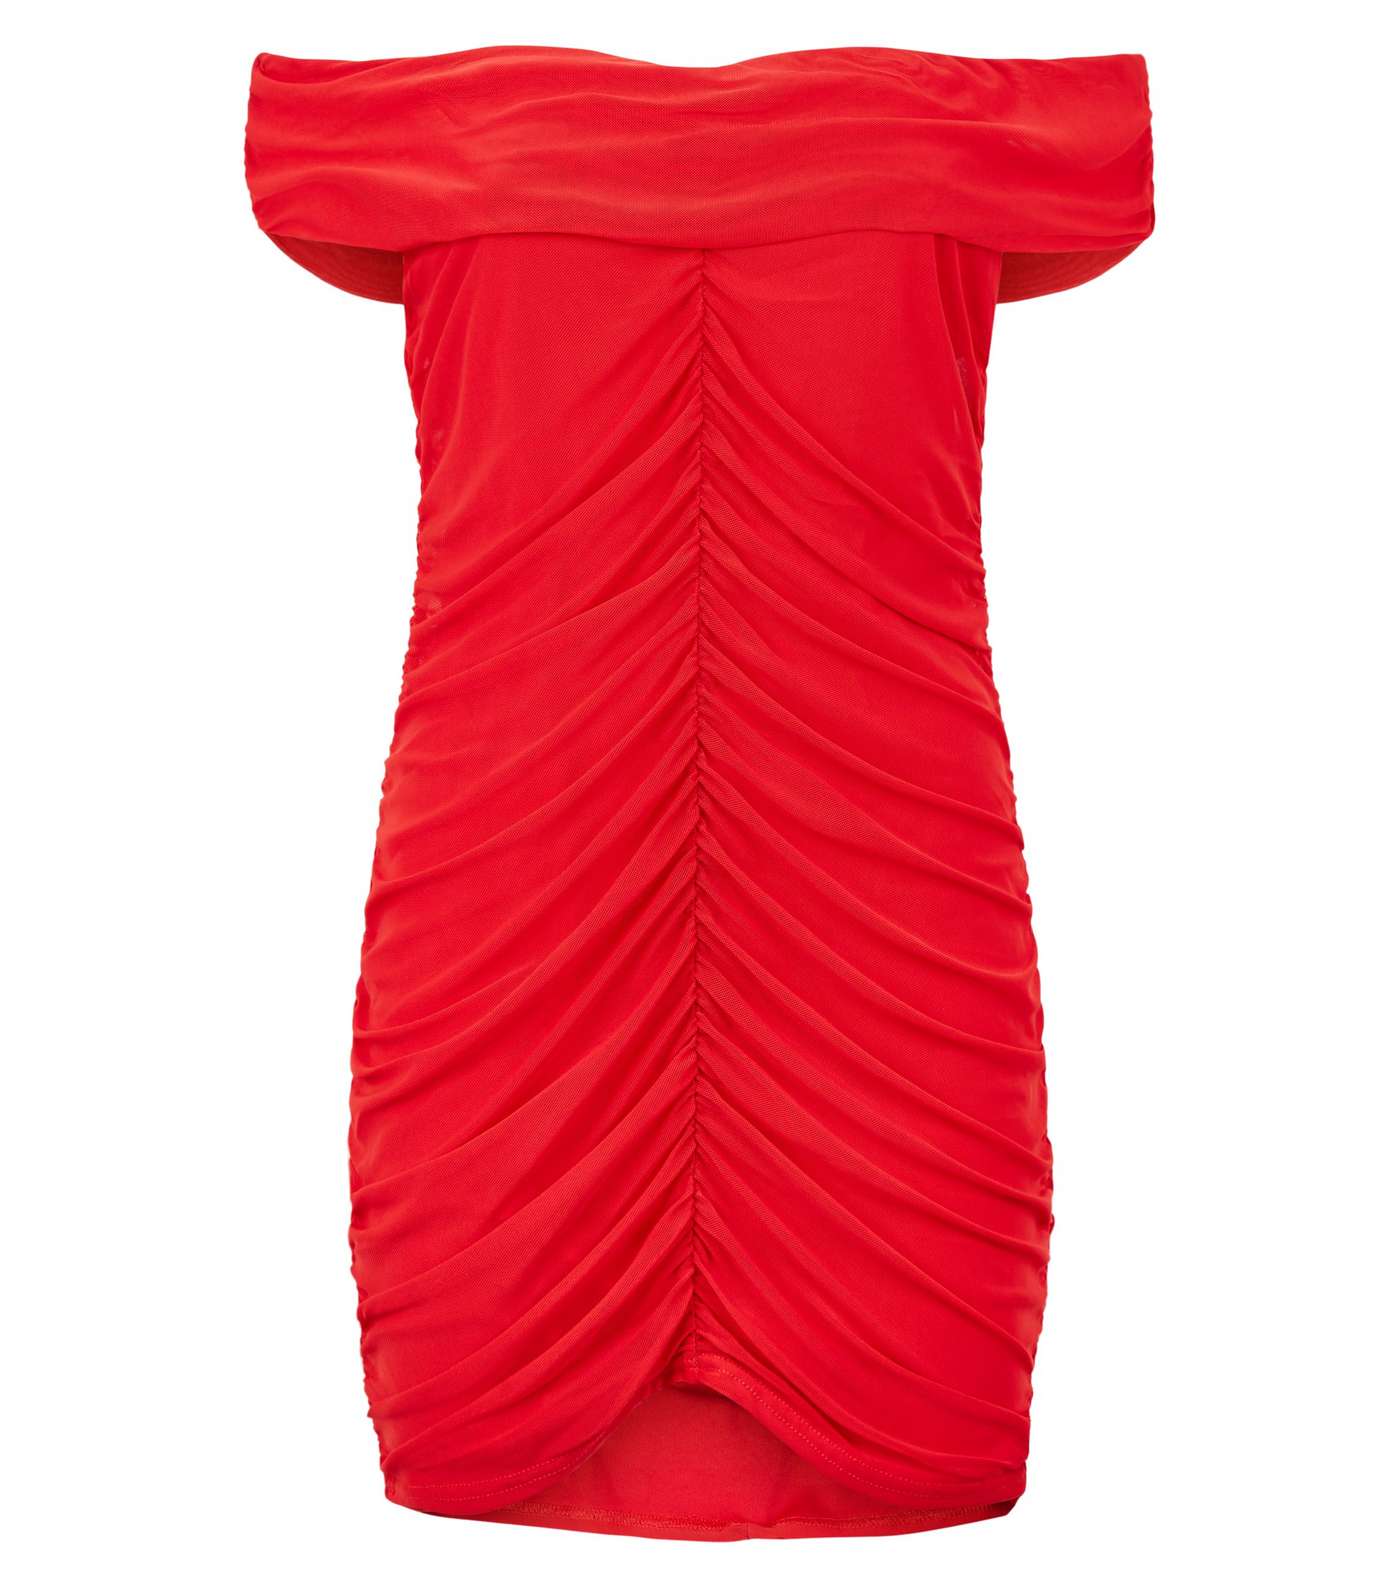 Missfiga Red Ruched Mesh Bardot Dress Image 4